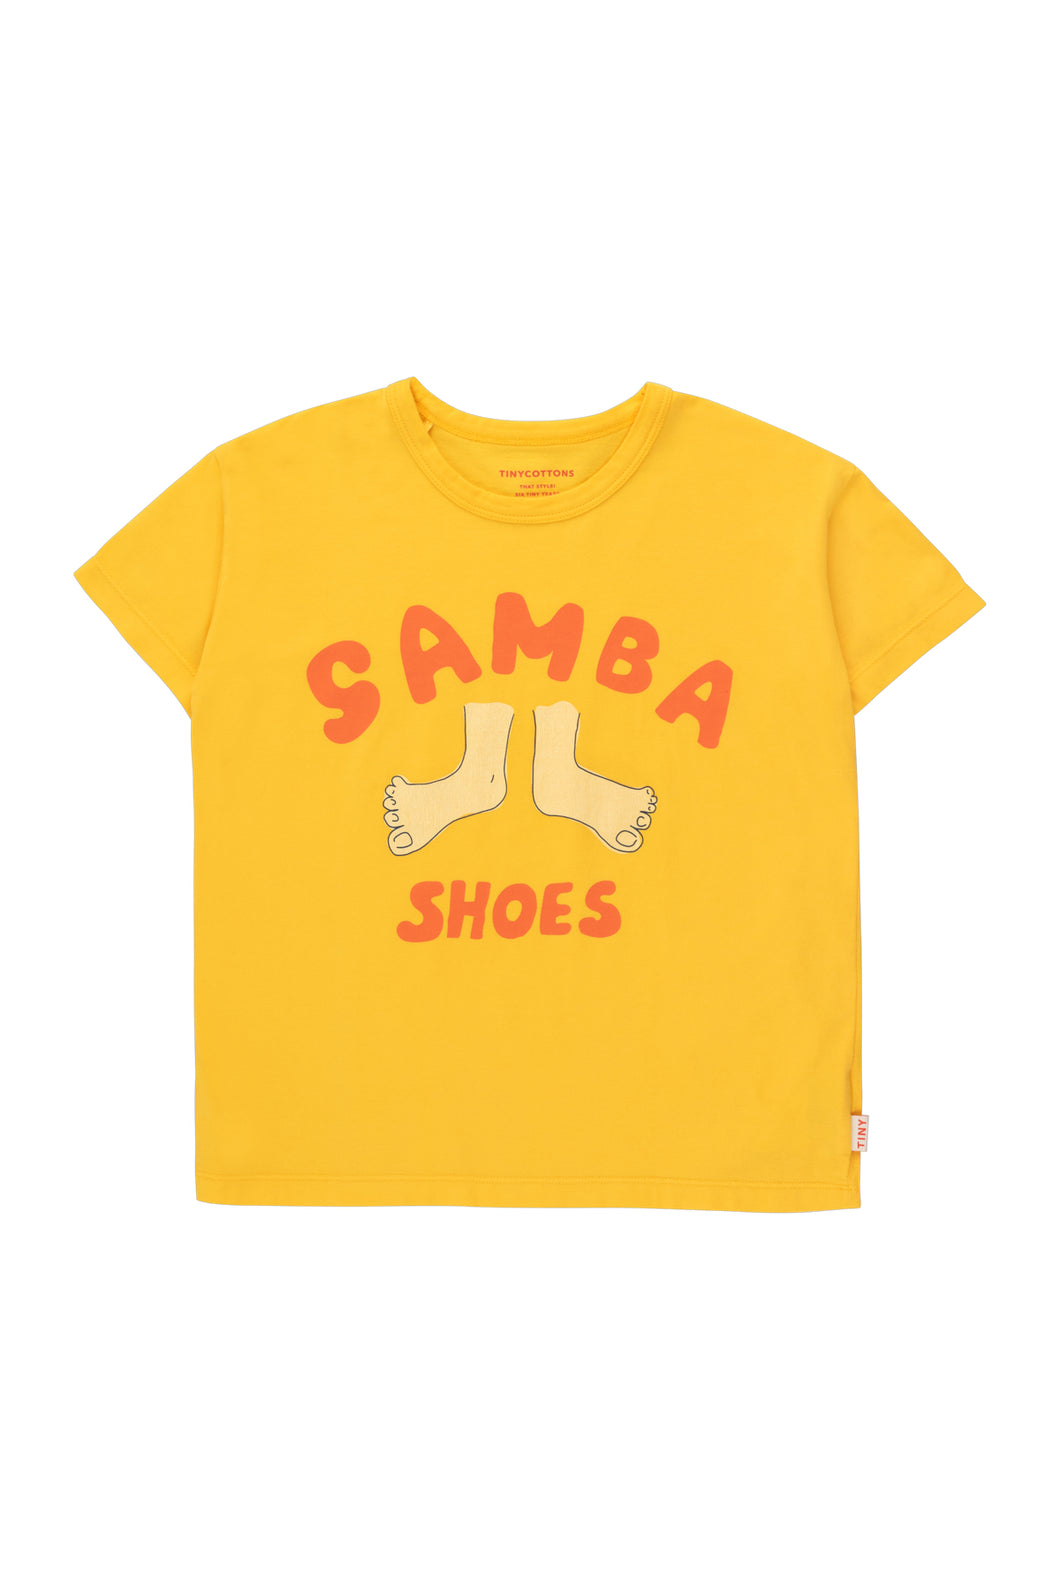 Samba Shoes Tee